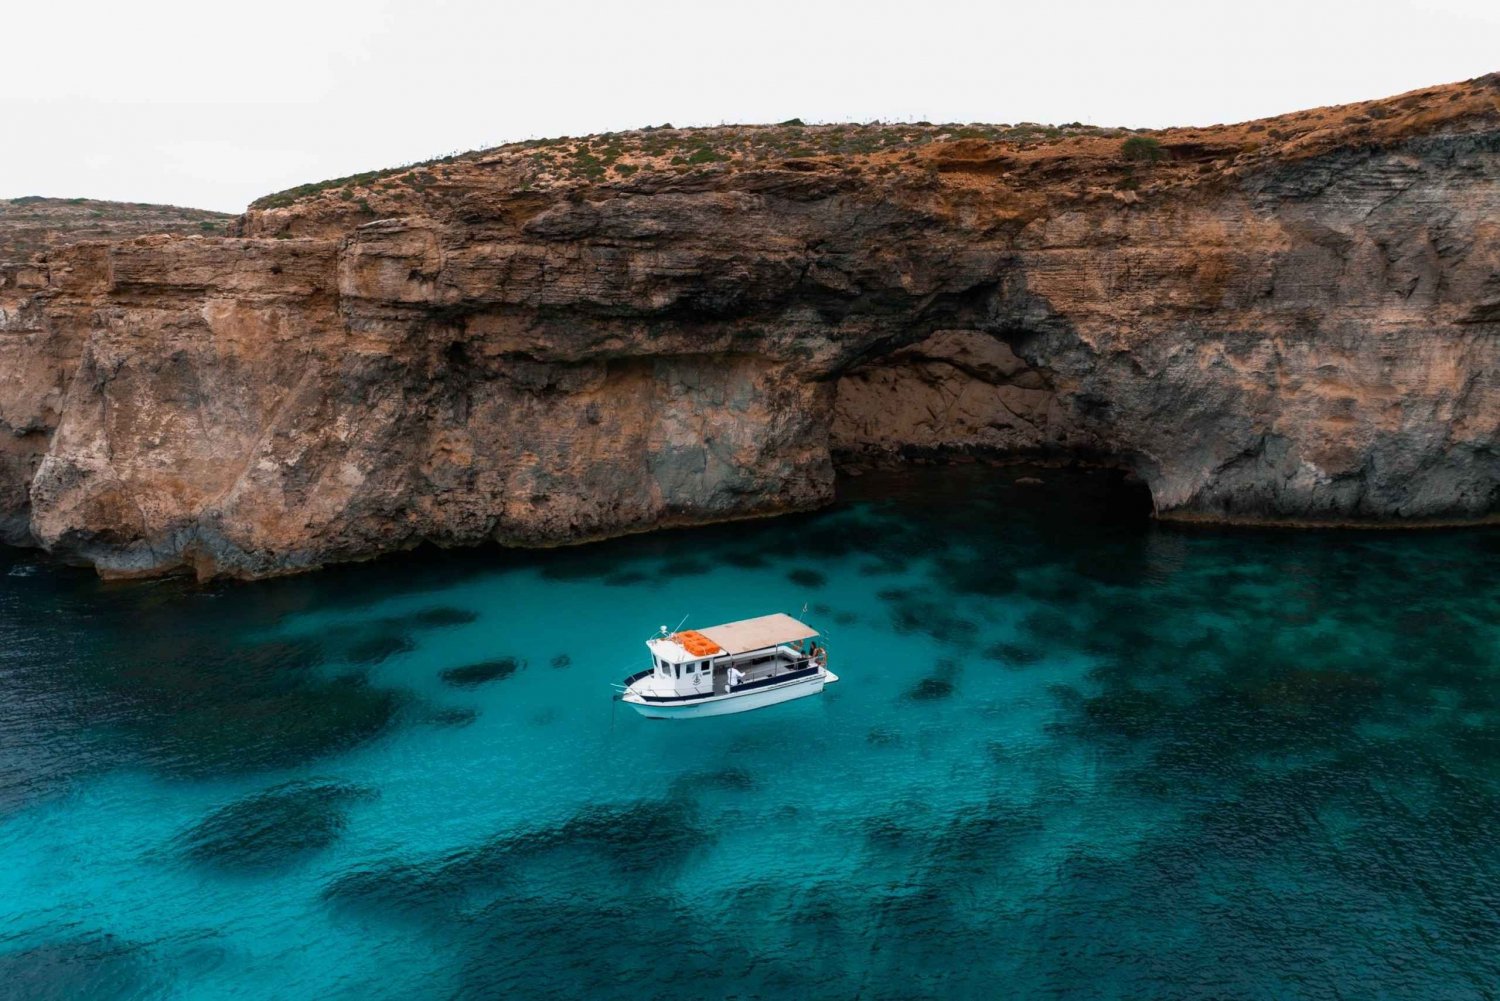 Blue Lagoon, Stranden en Baaien Trip in Comino en Malta